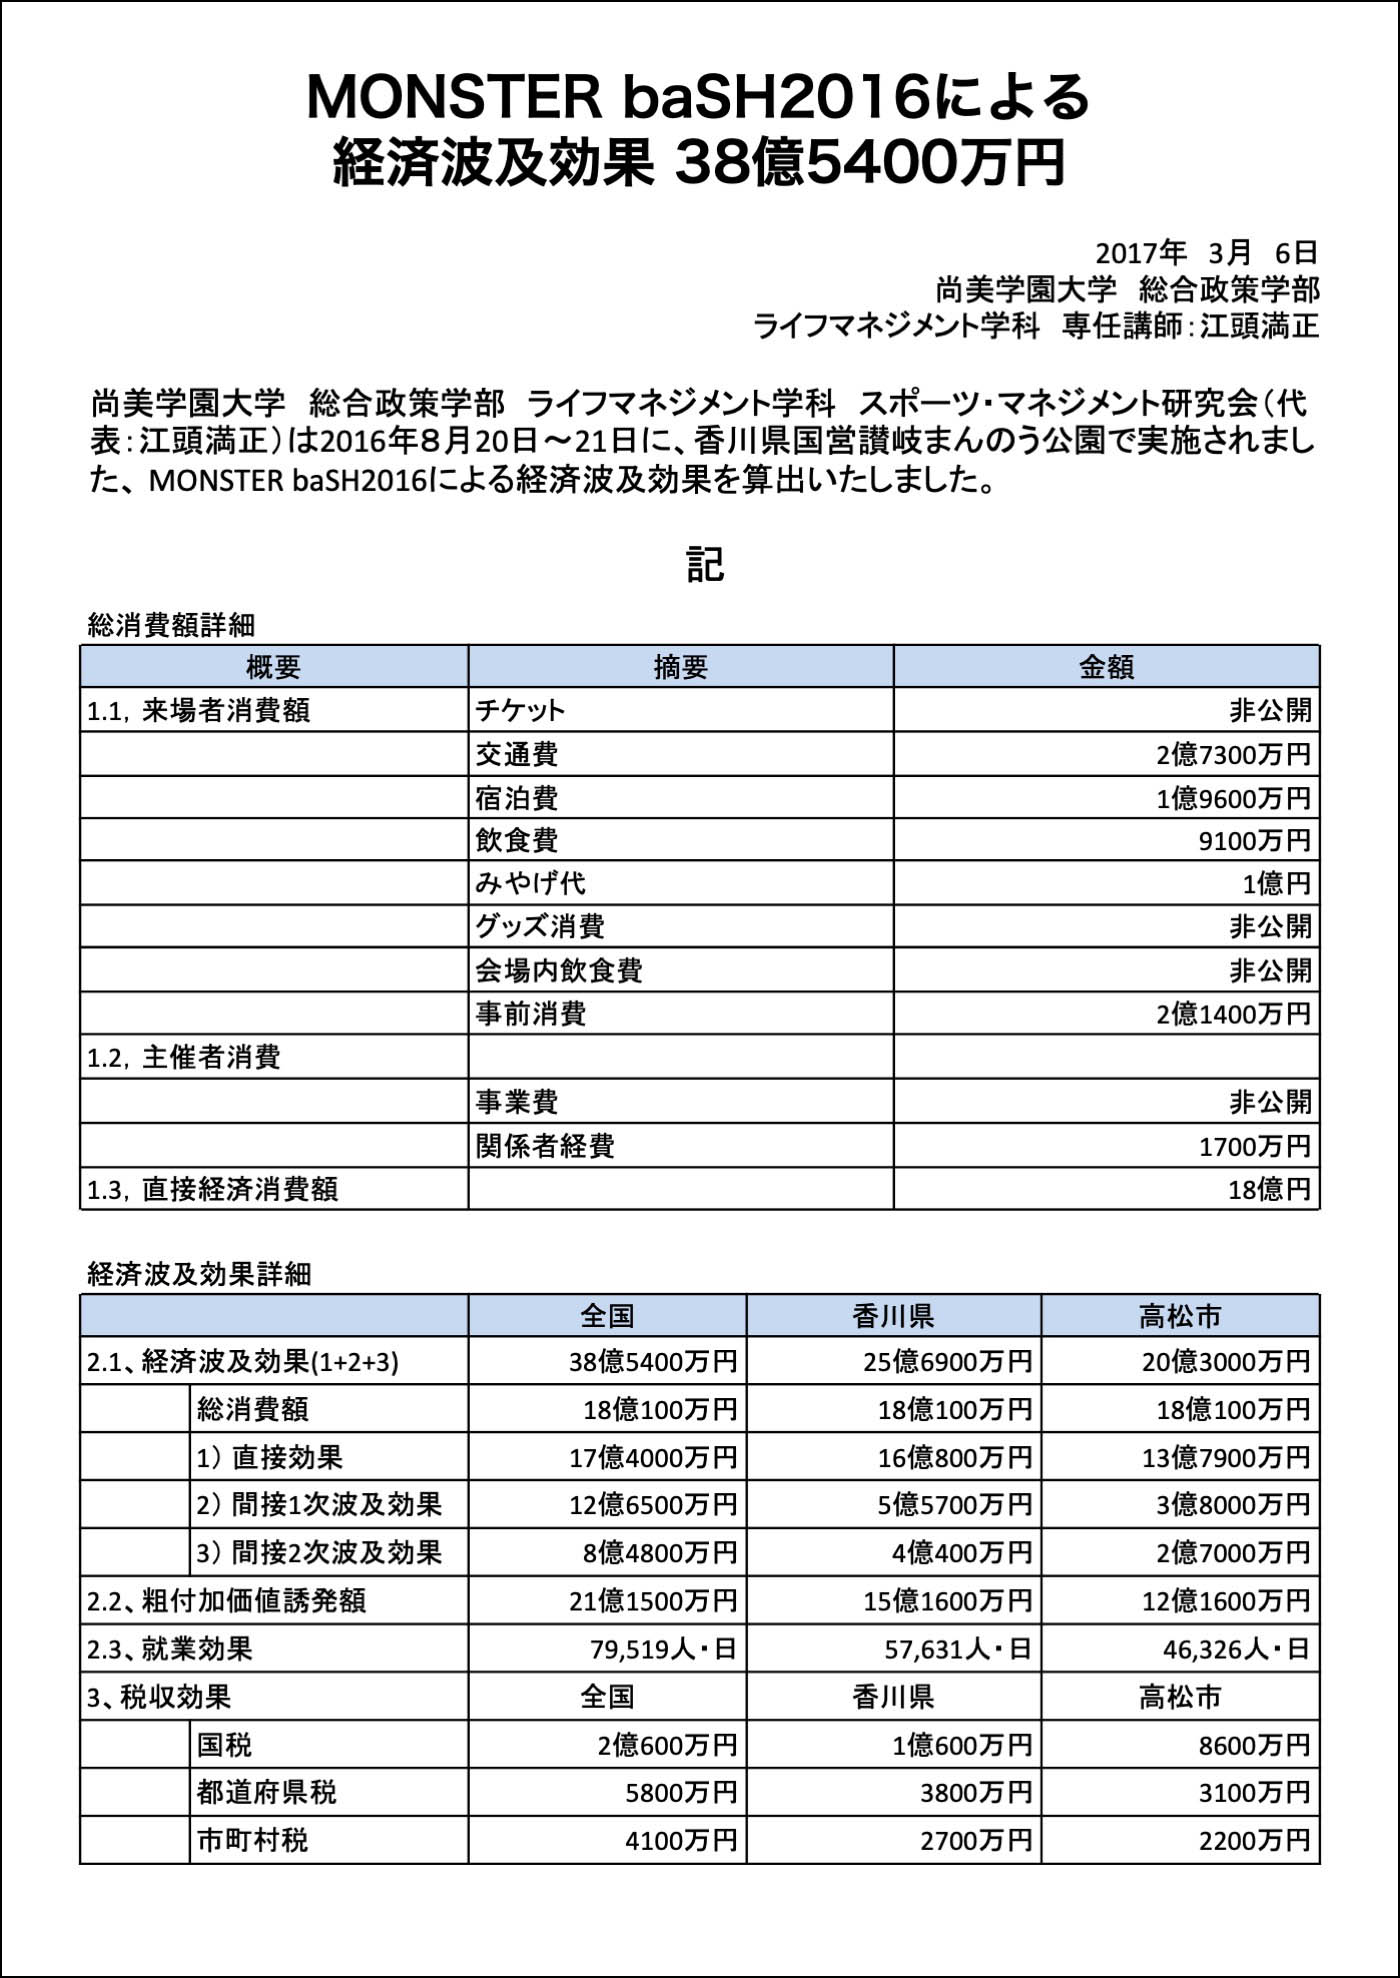 香川音楽フェス中止 経済損失50億円以上 Monster Bash 経済効果 Net